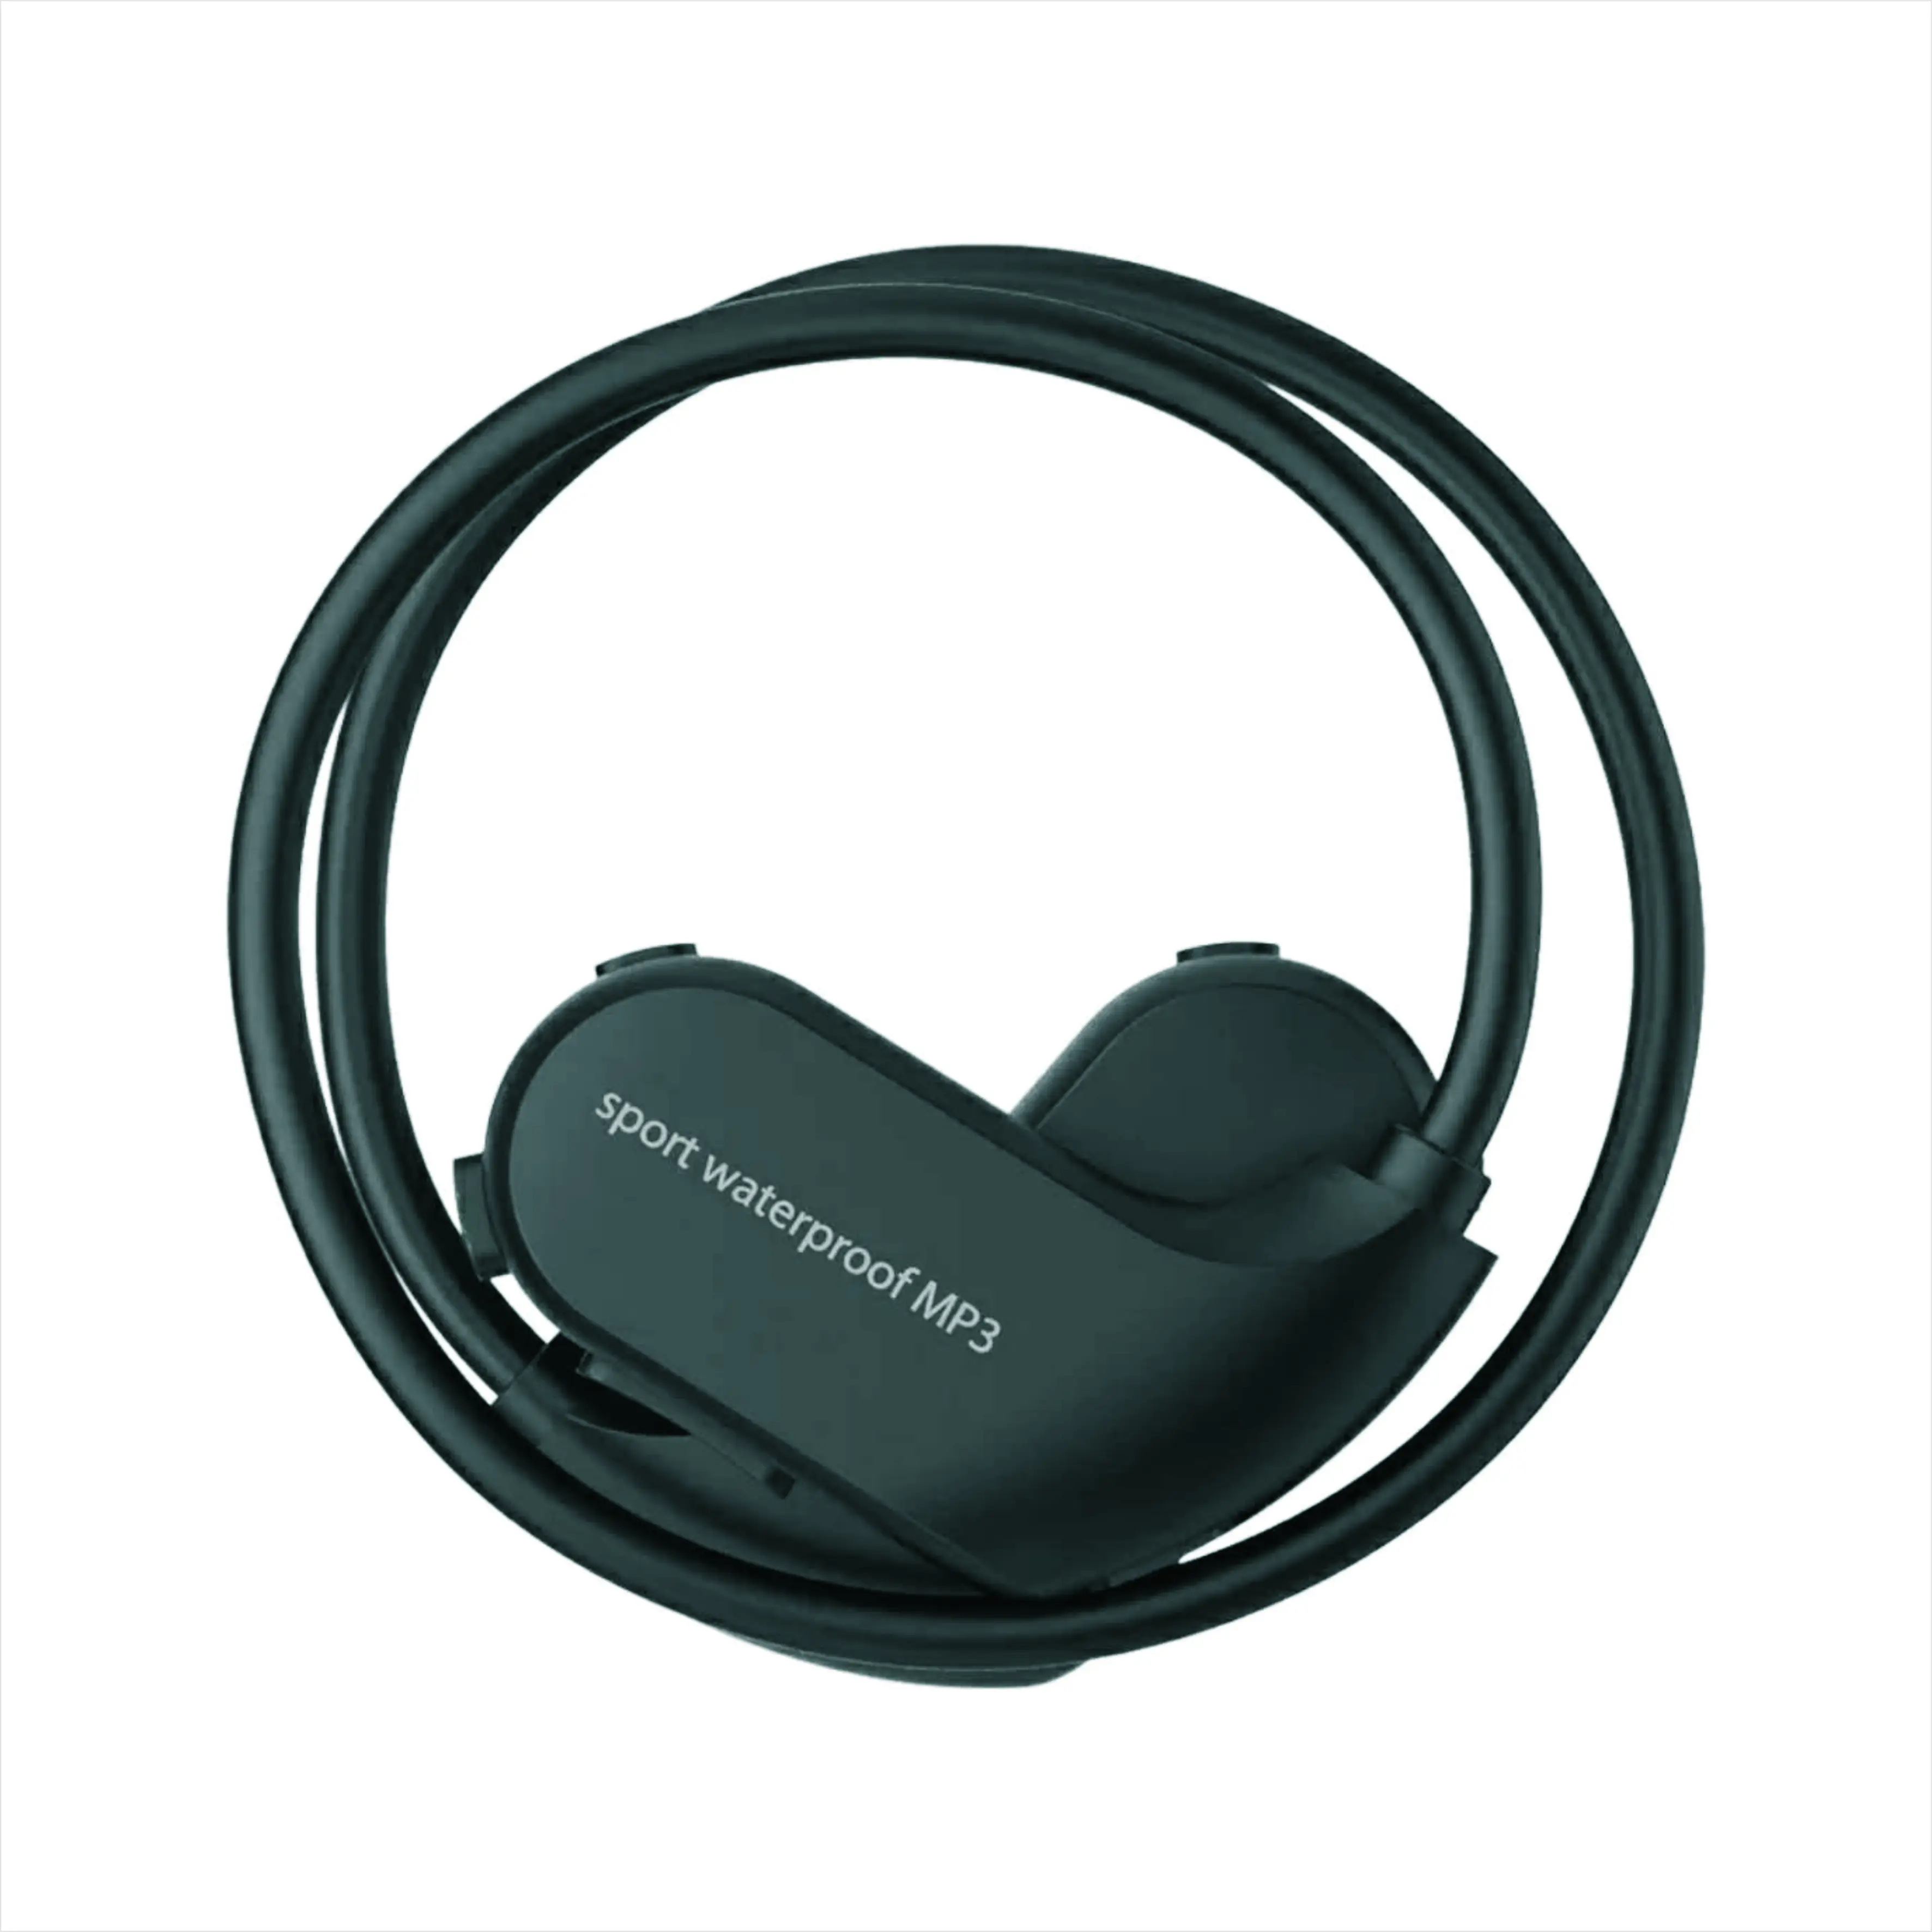 Samtronic הולכה עצם אוזניות אלחוטי אוזניות IPX8 עמיד למים MP3 מוסיקה לשחייה צלילה ספורט